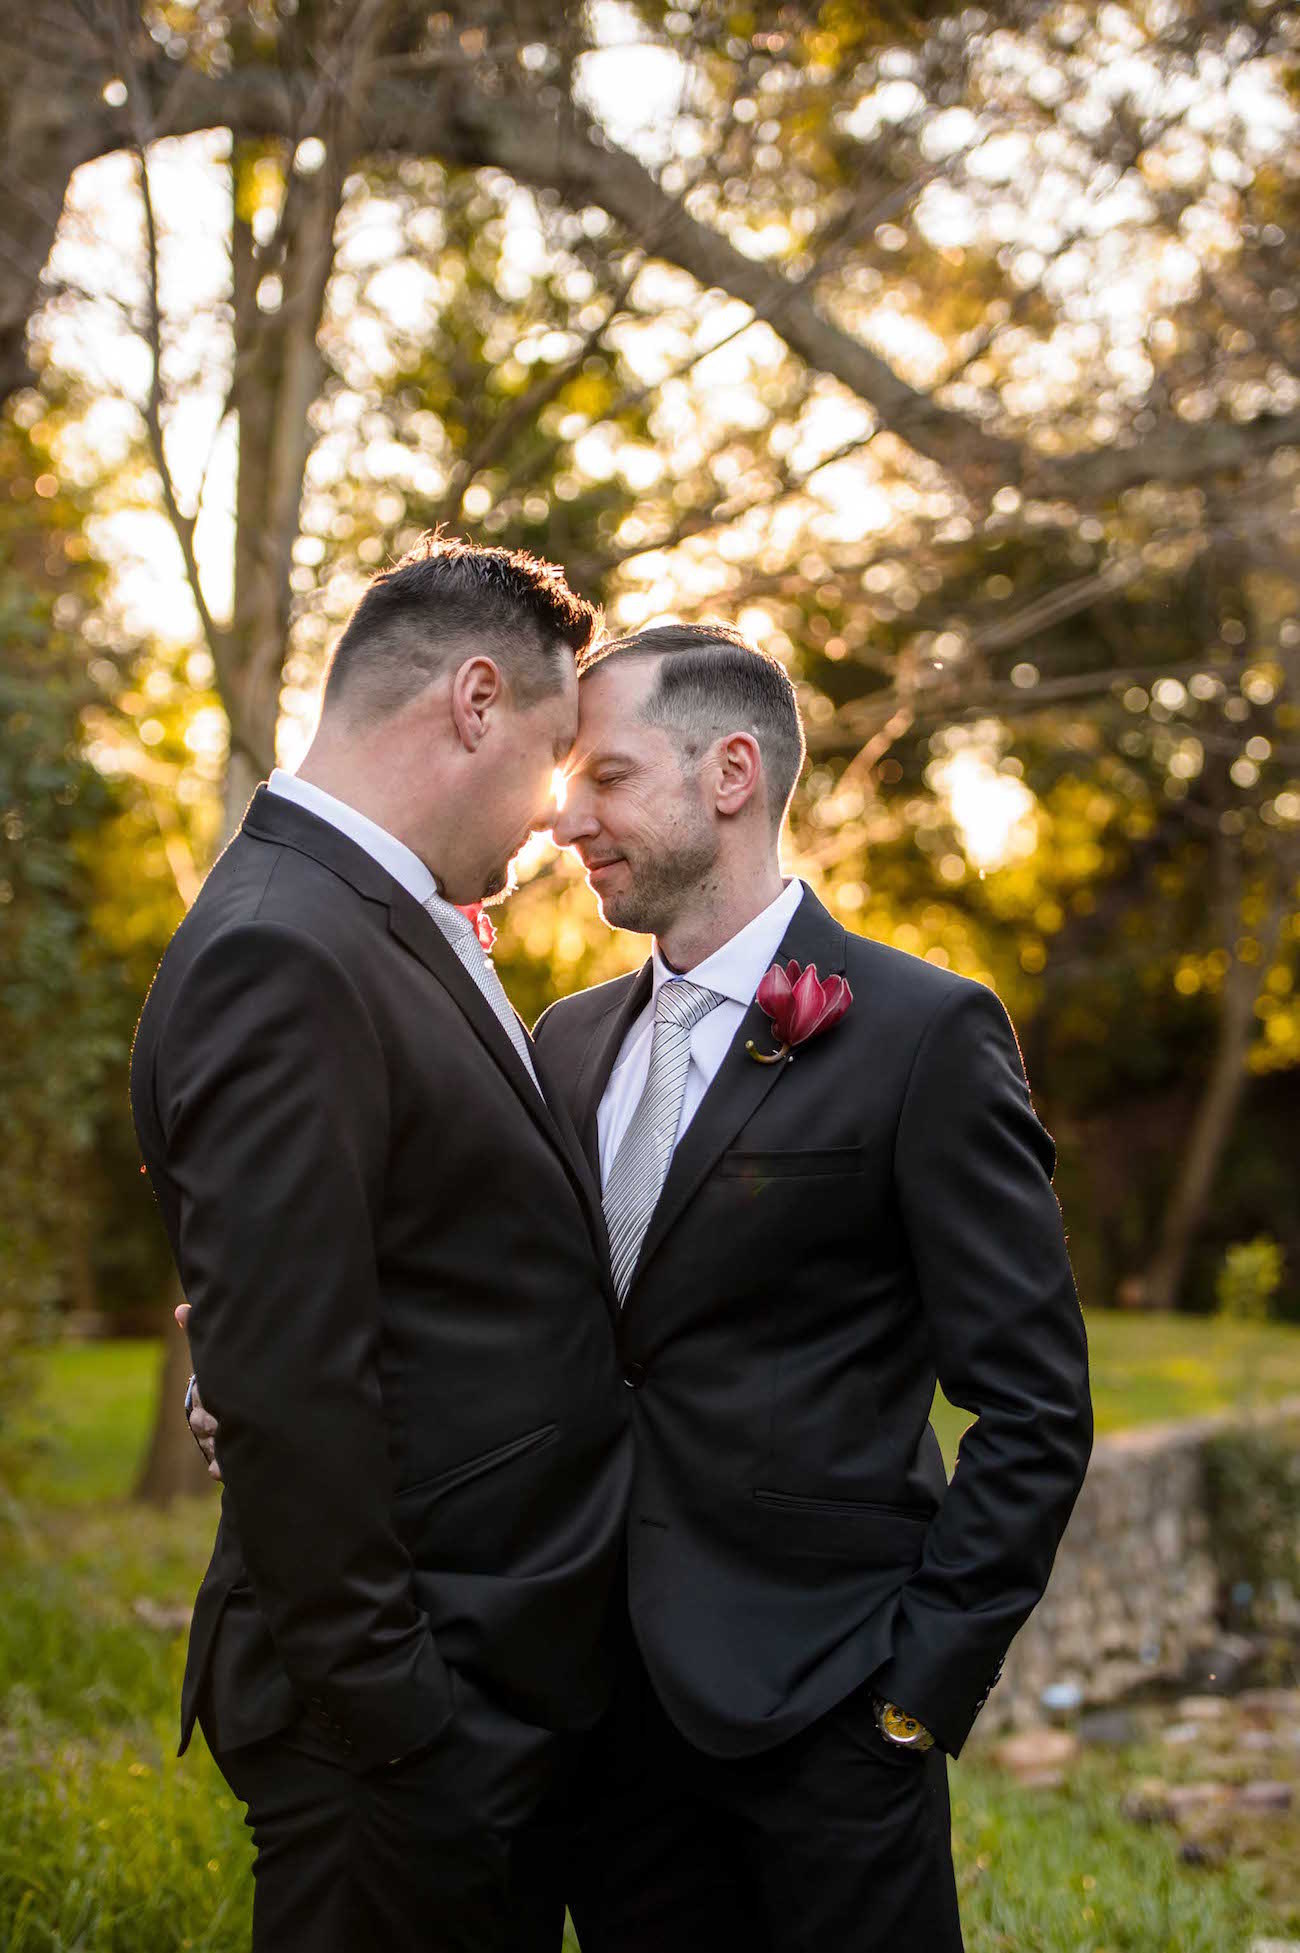 Colourful Glamorous Same Sex Wedding | Credit: Vizion Photography